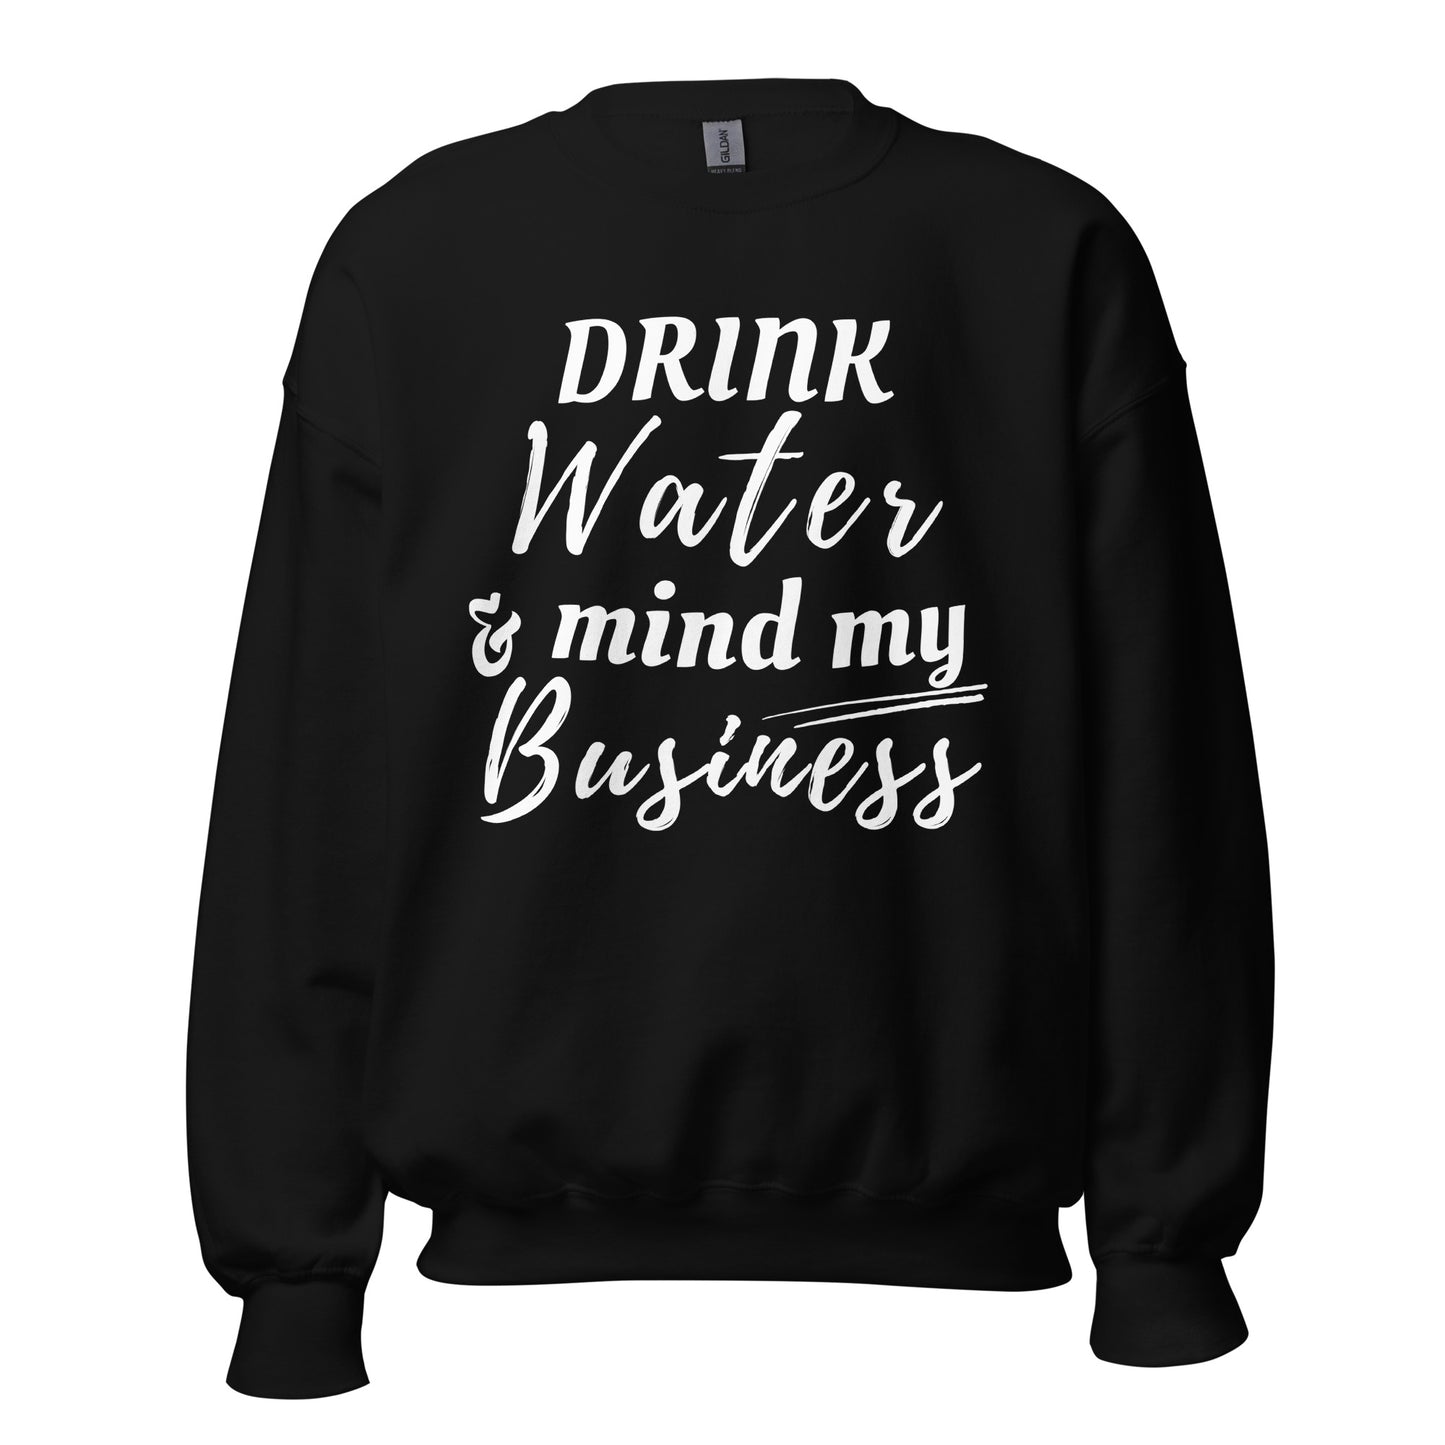 "Drink Water and Mind my Business" Unisex Sweatshirt